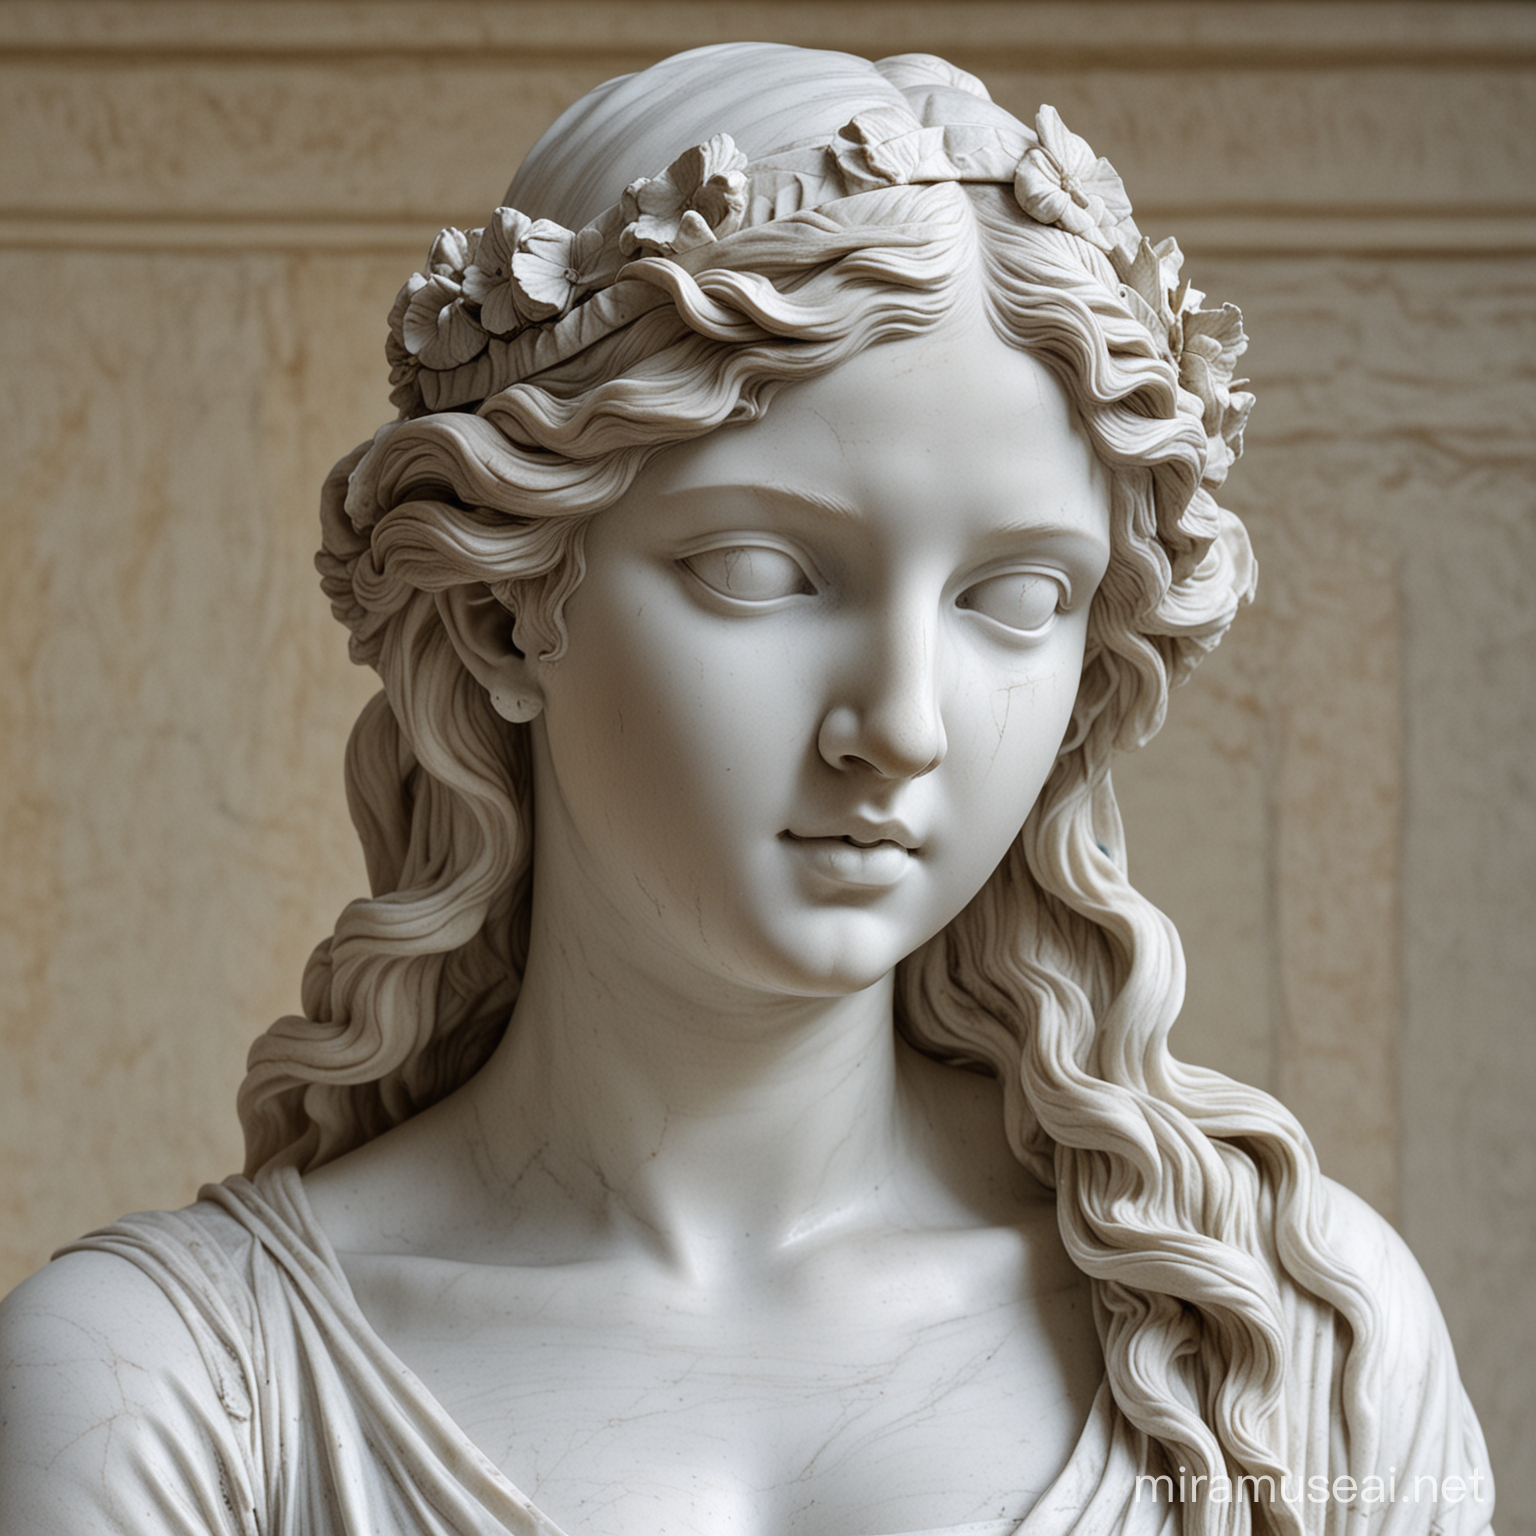 Elegant Marble Nymph Sculpture in Classical Attire